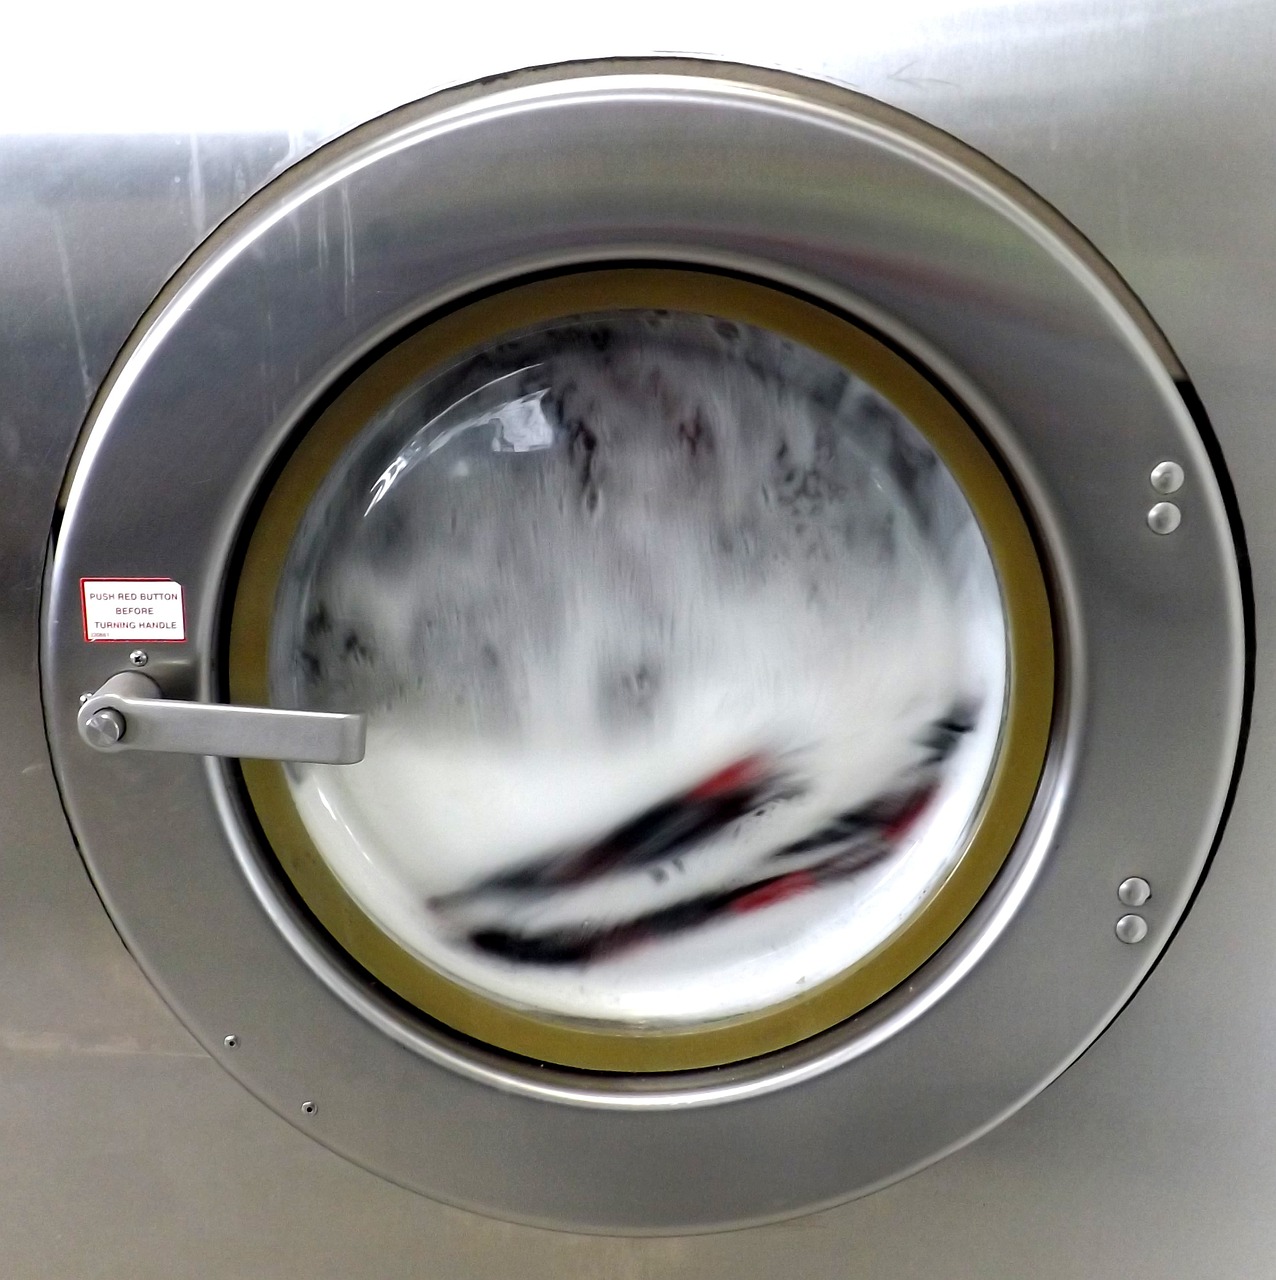 laundromat-1567859-1280.jpg